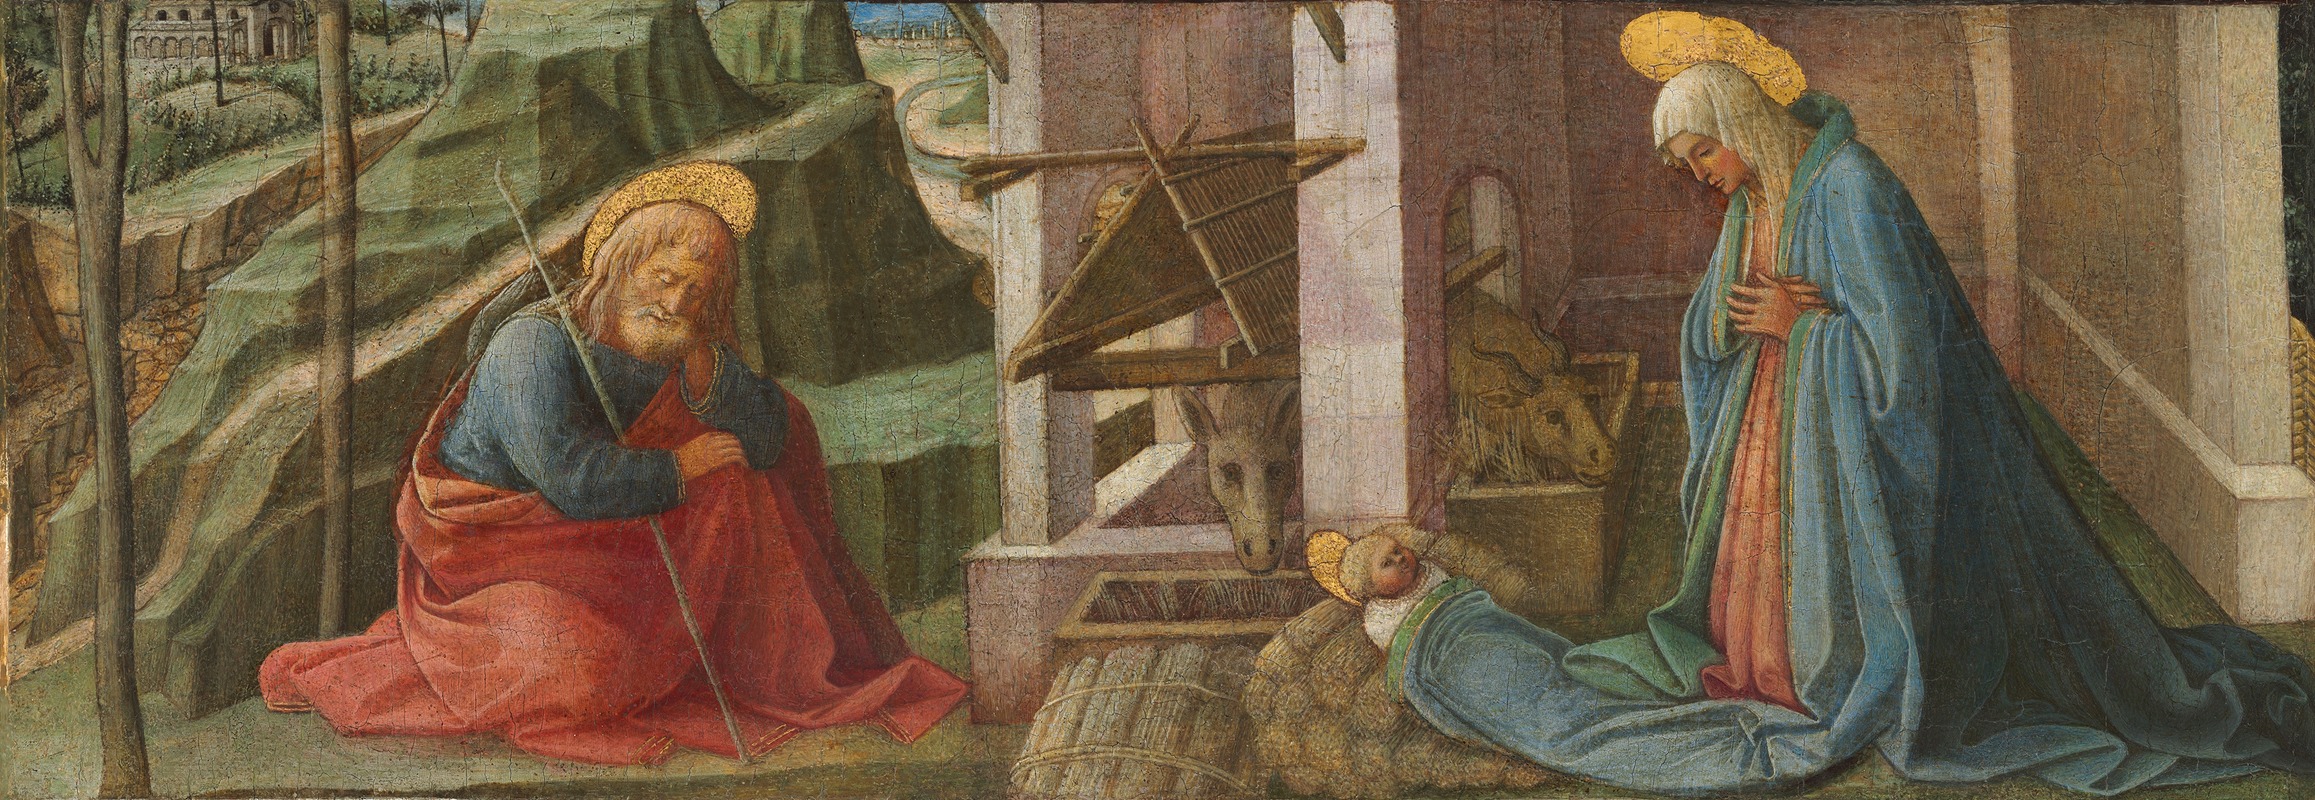 Follower of Filippo Lippi - The Nativity